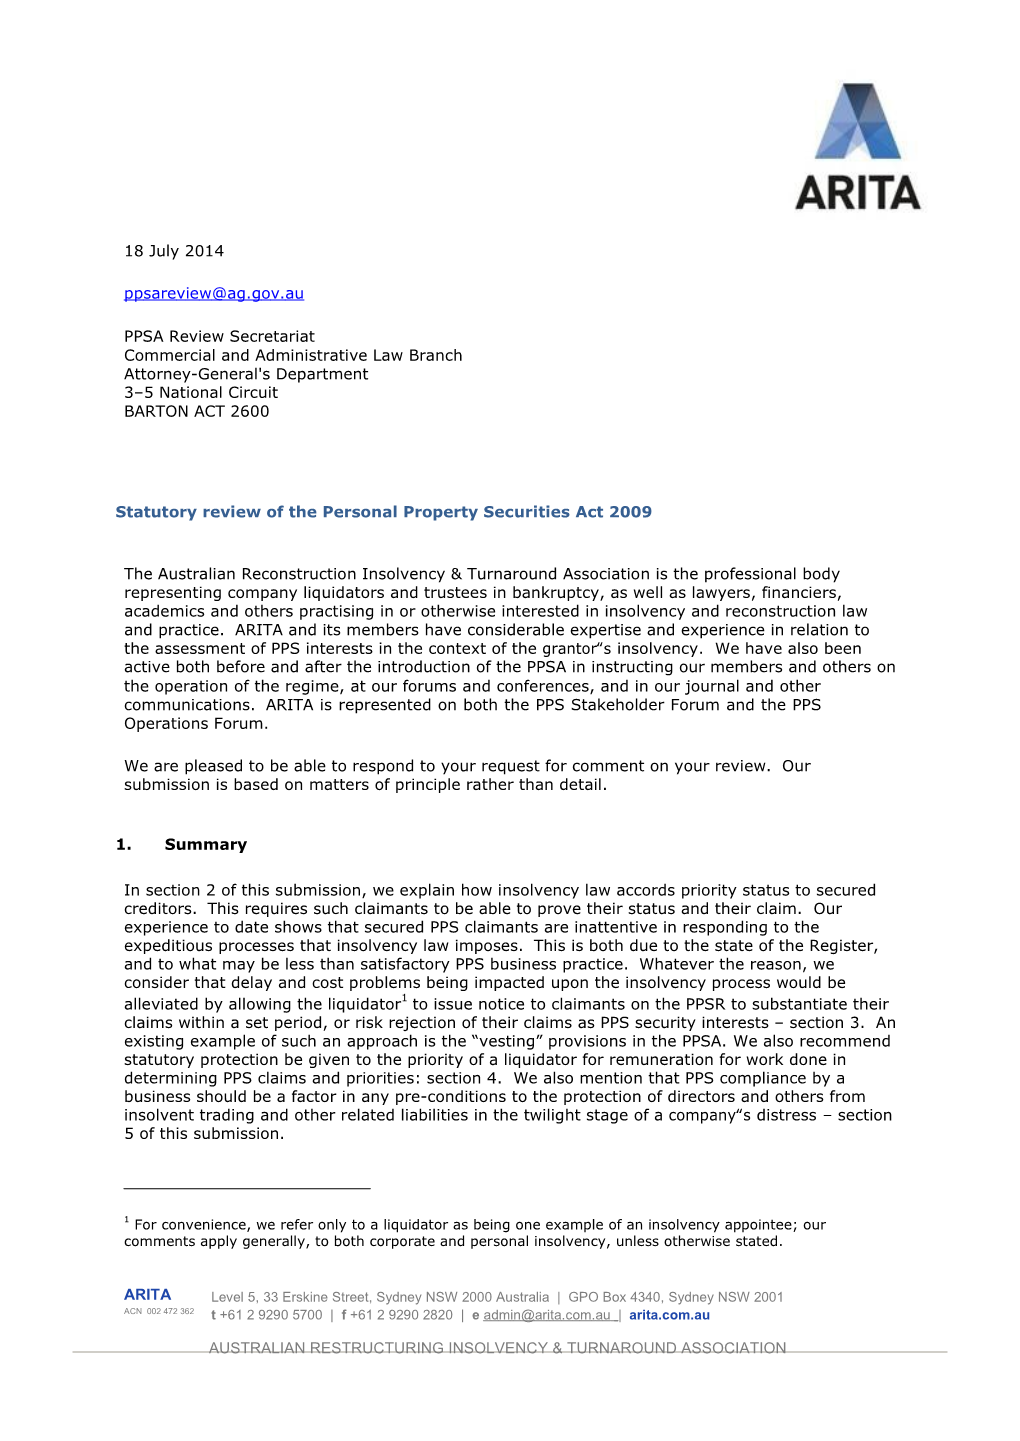 051 - Australian Restructuring Insolvency & Turnaround Association